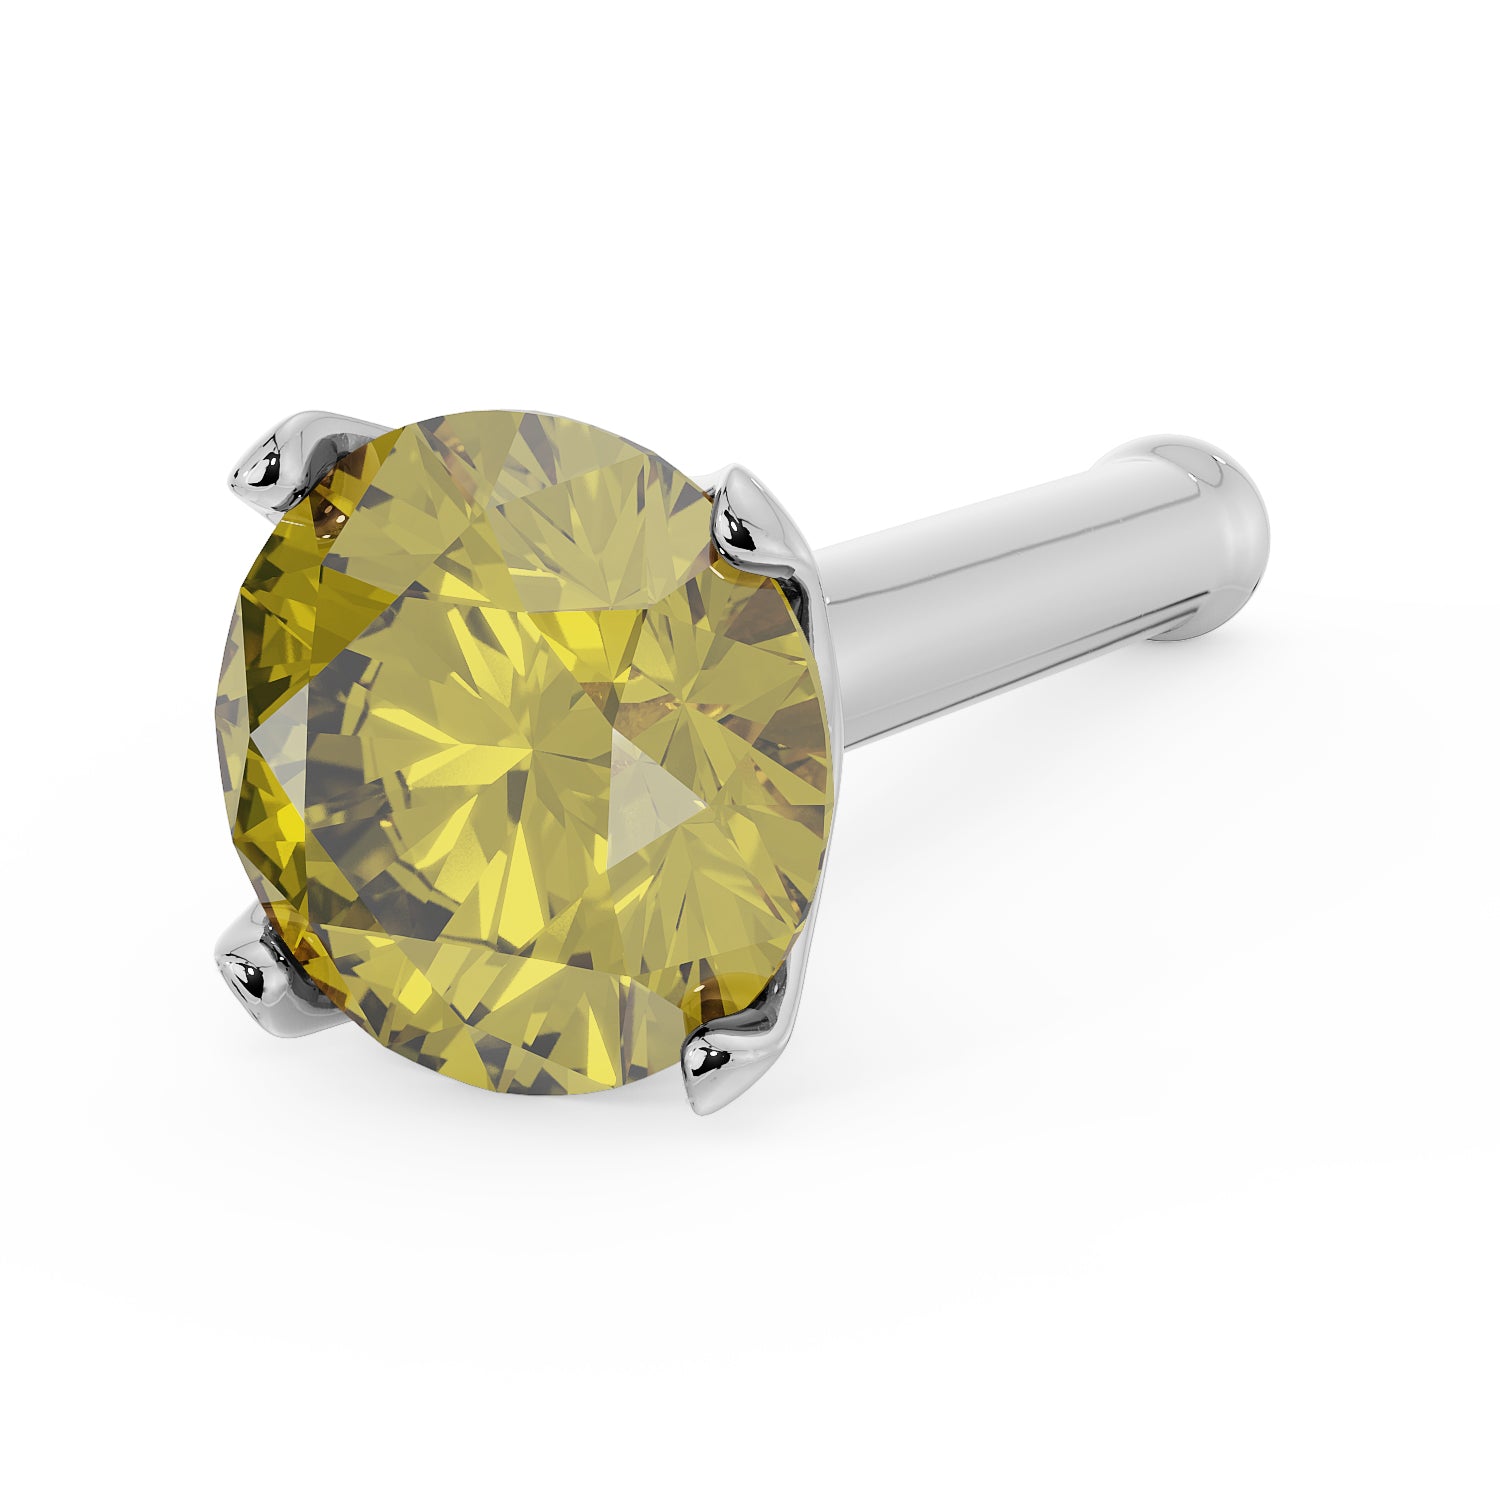 3mm Yellow Diamond Prong Nose Ring Stud